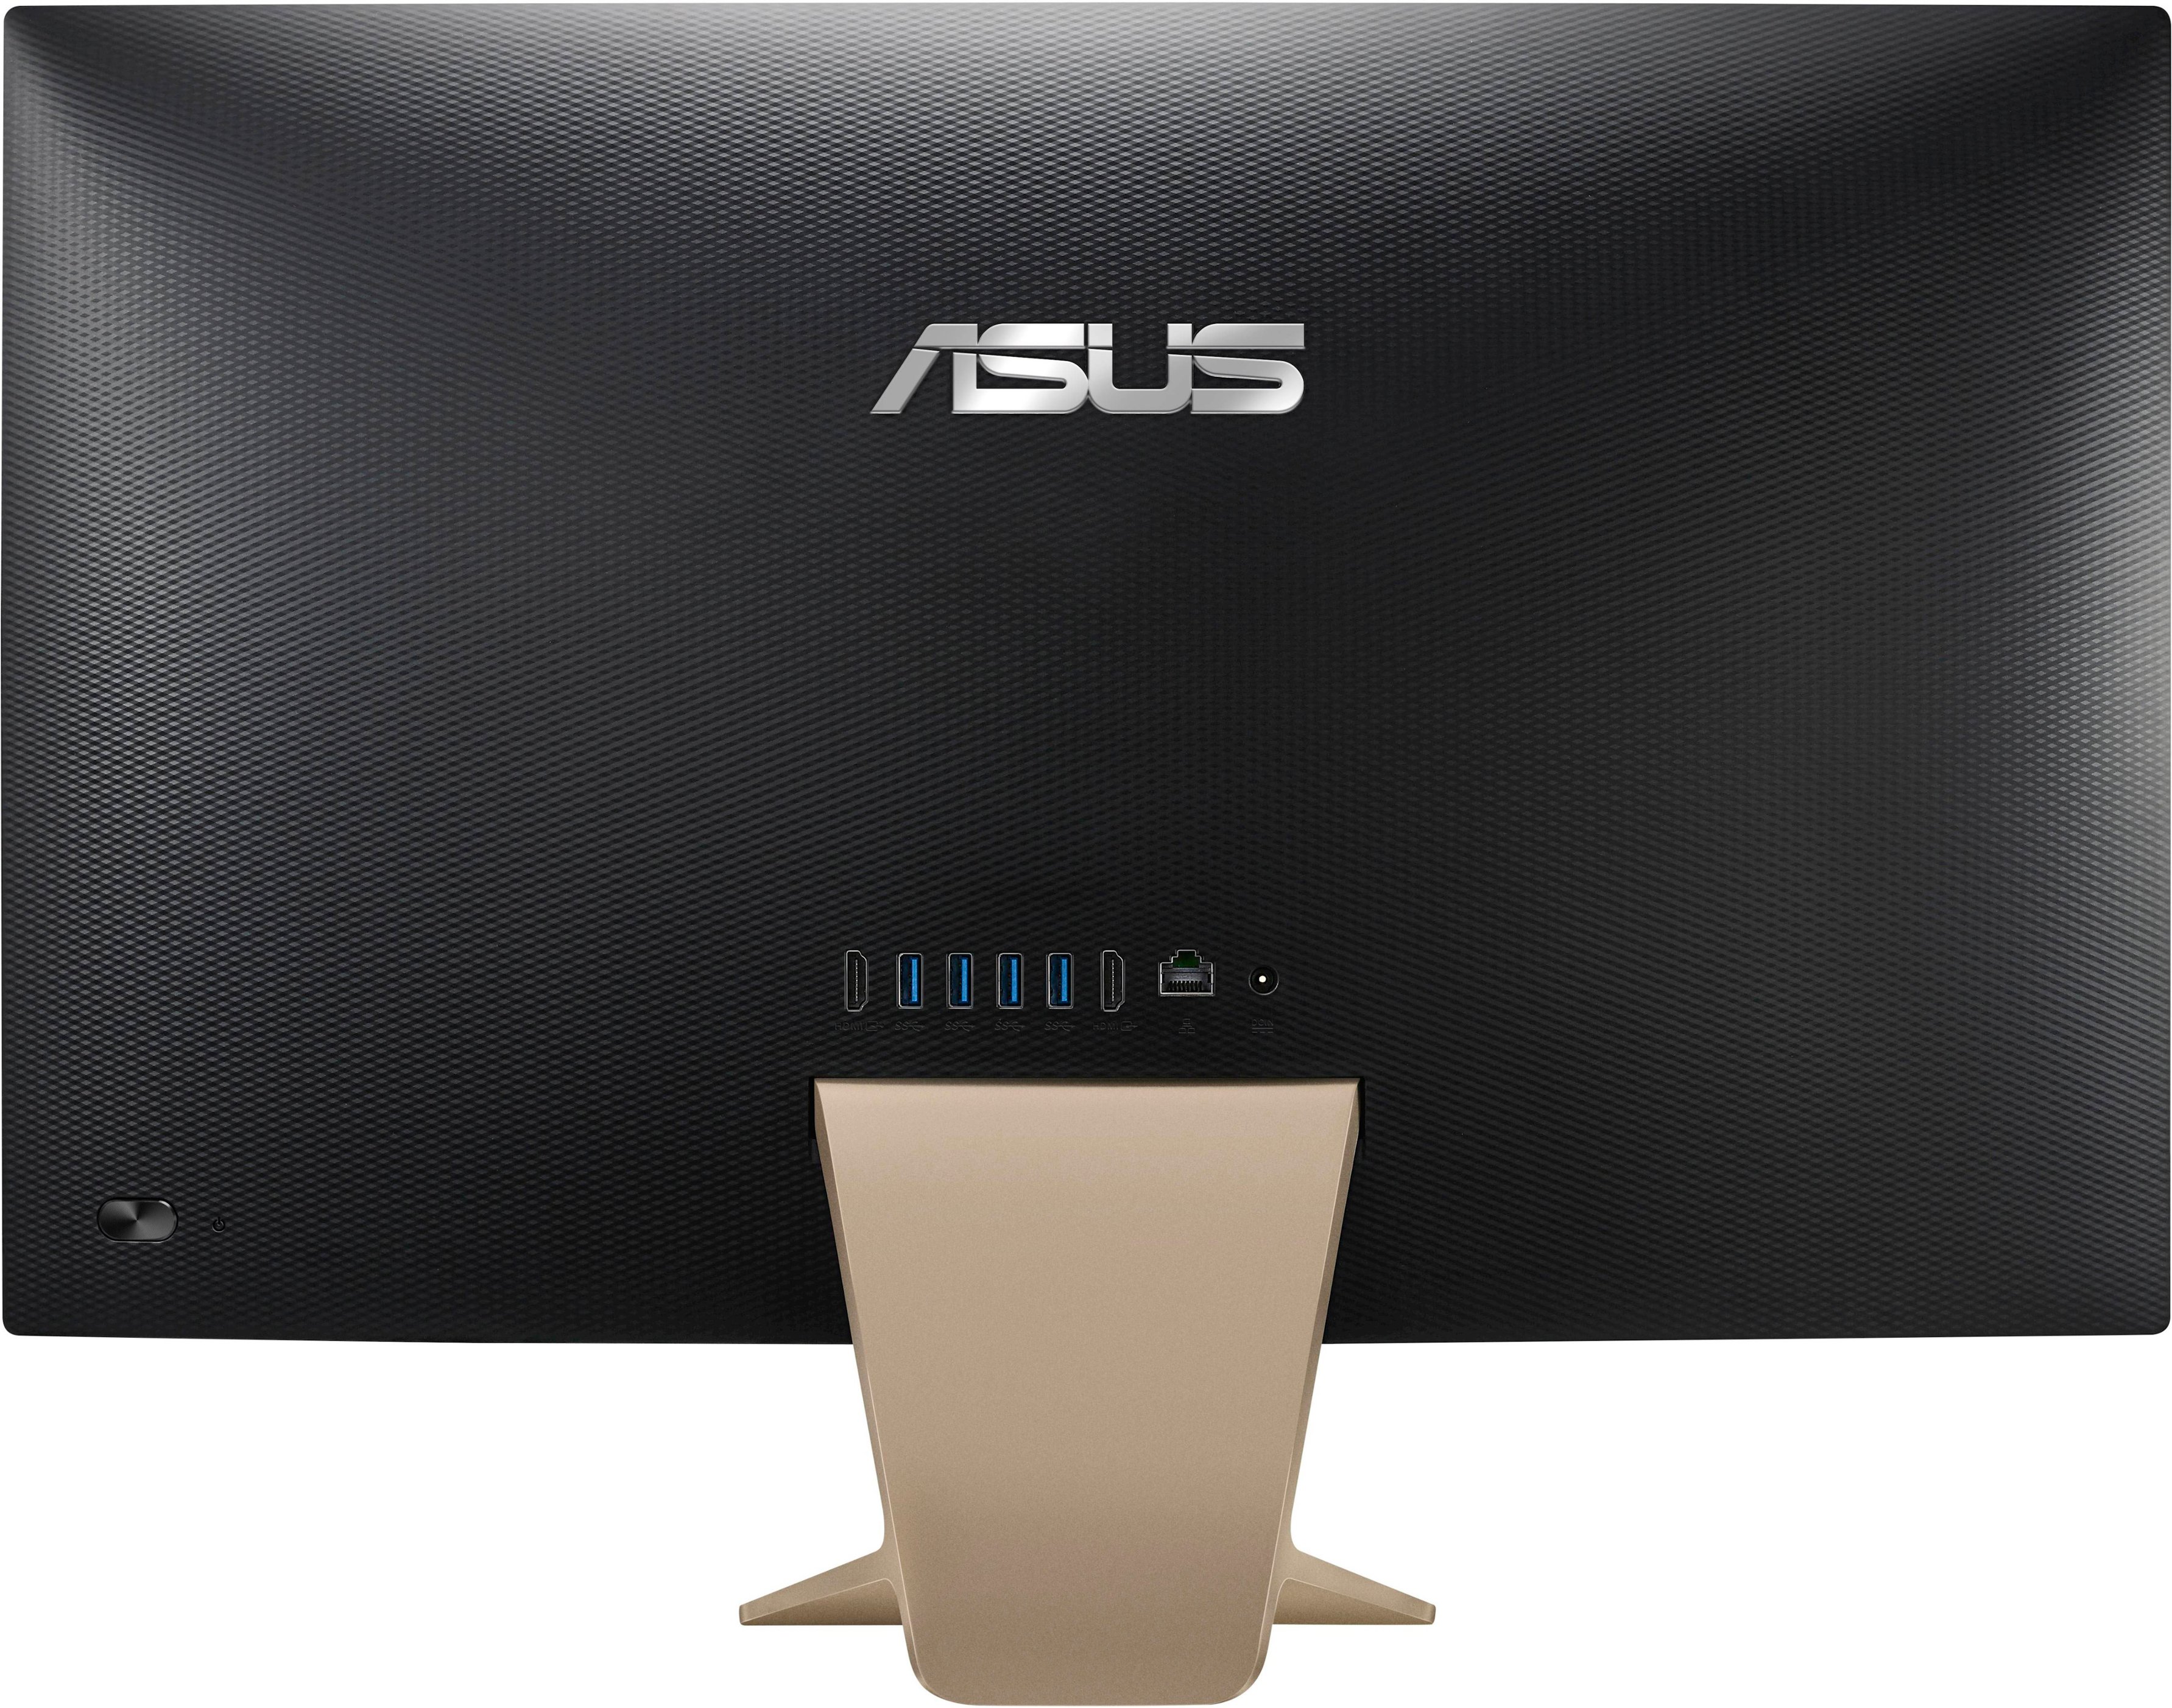 Back View: ASUS - TUF Gaming 27" LCD Widescreen FreeSync Monitor (2 x HDMI, DisplayPort) - Black